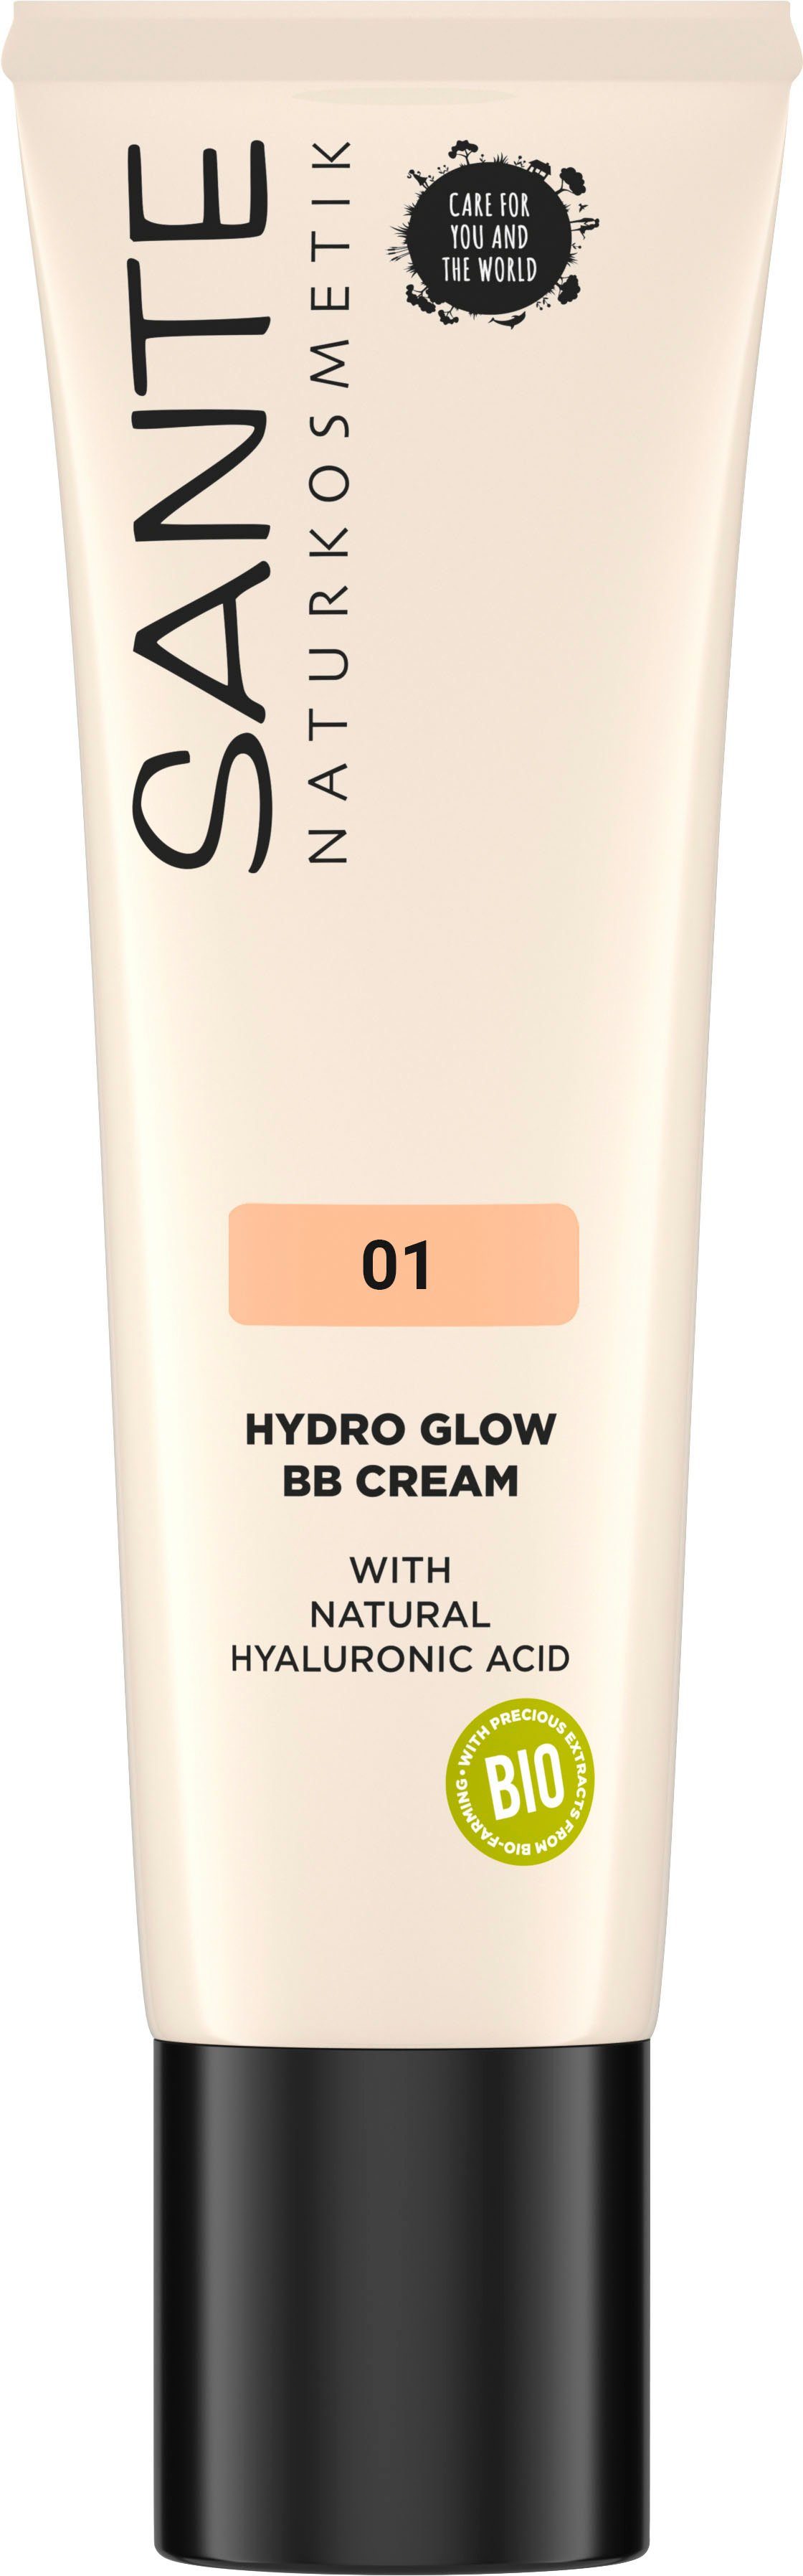 SANTE BB Glow Sante Make-up 01 Light-Medium Hydro Cream